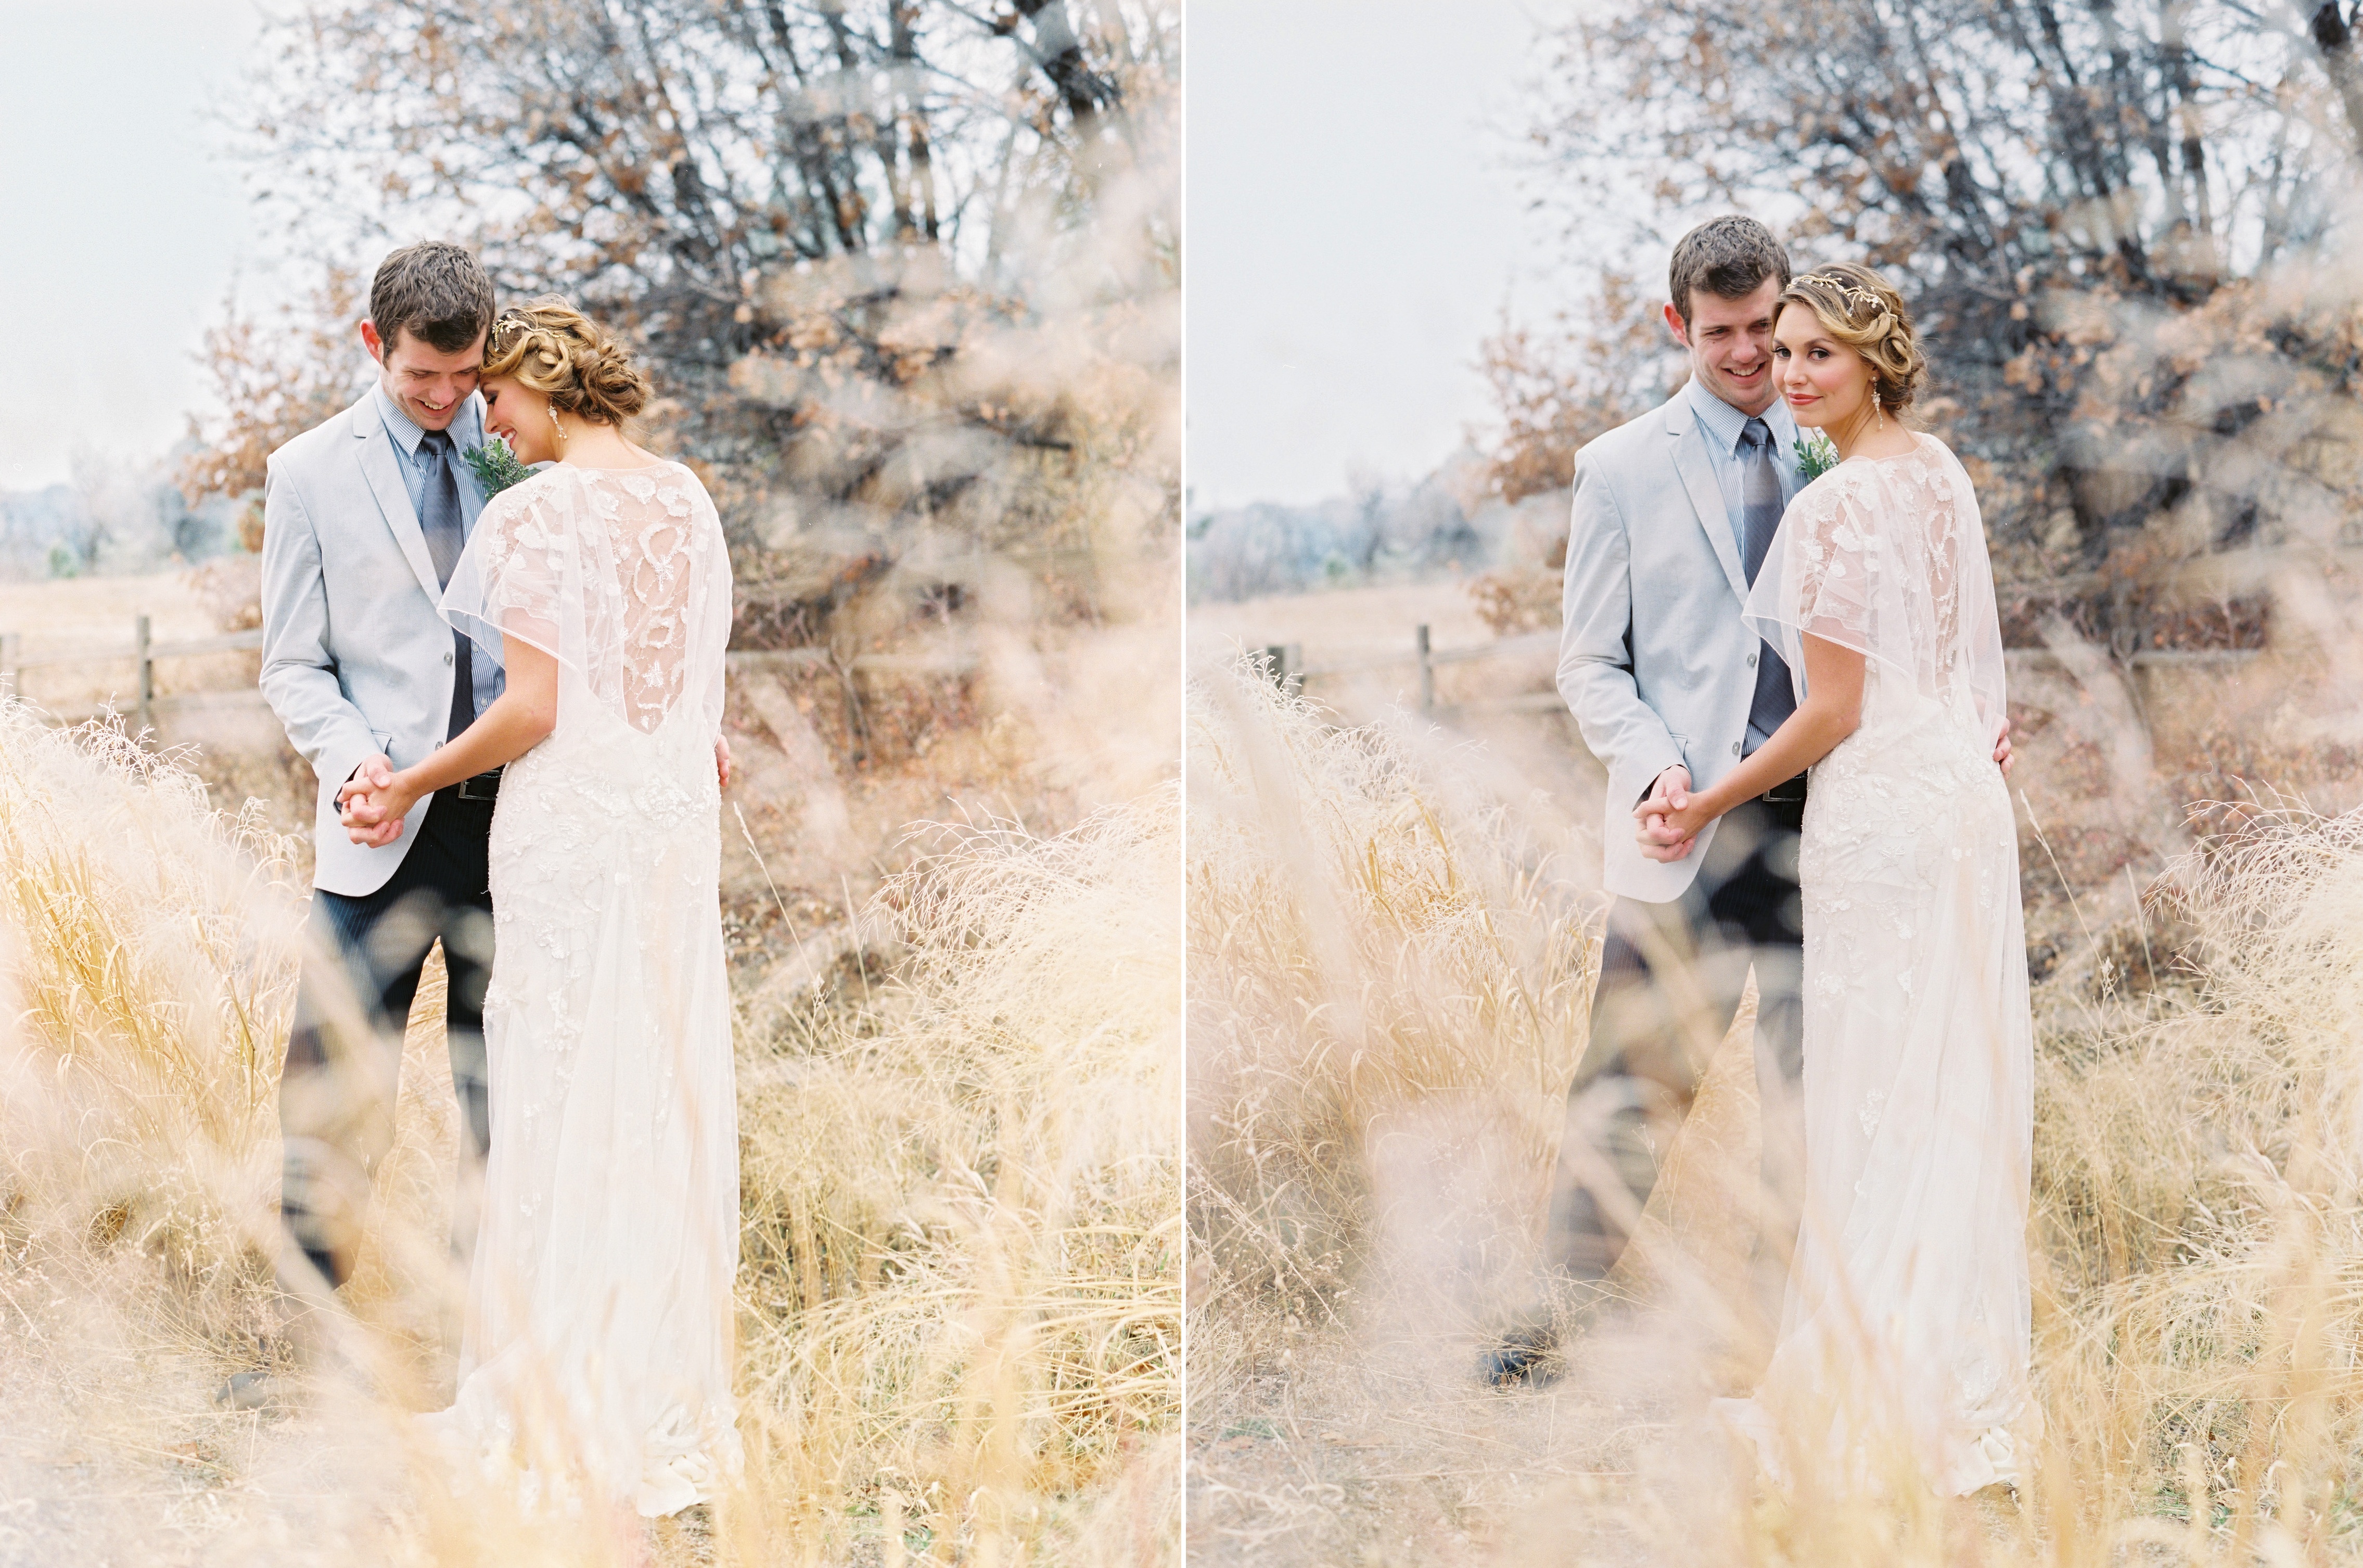 Elegant Castle Cliffs Wedding Inspiration Shoot from Laura Murray Photography